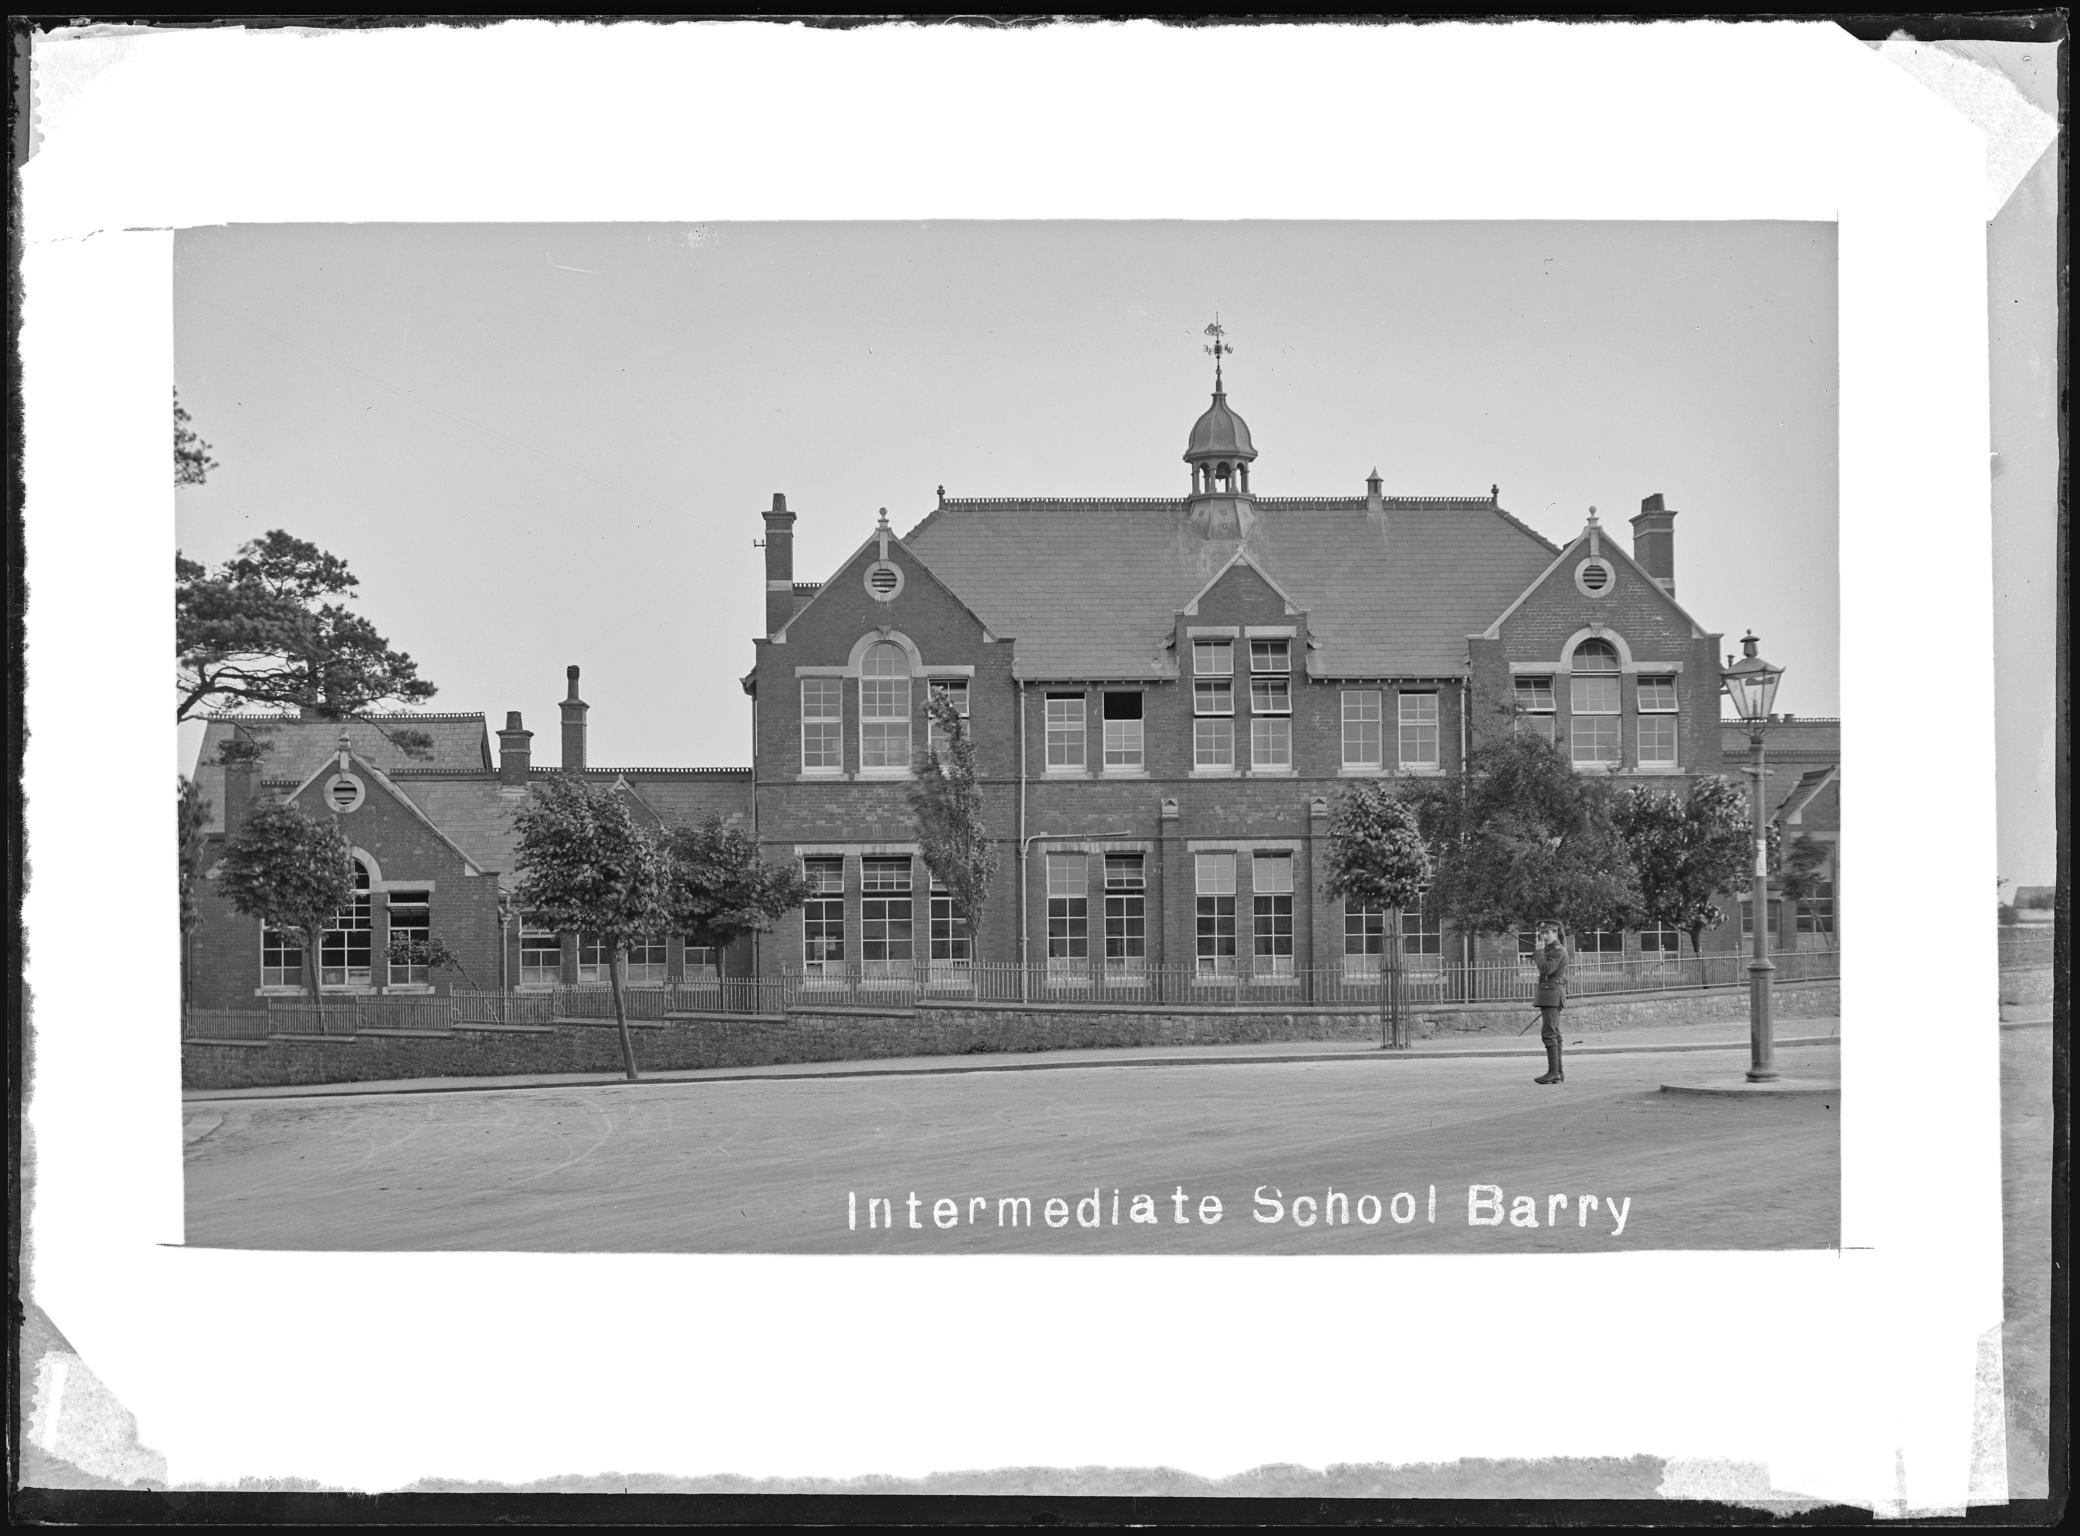 Intermediate School Barry (negative)